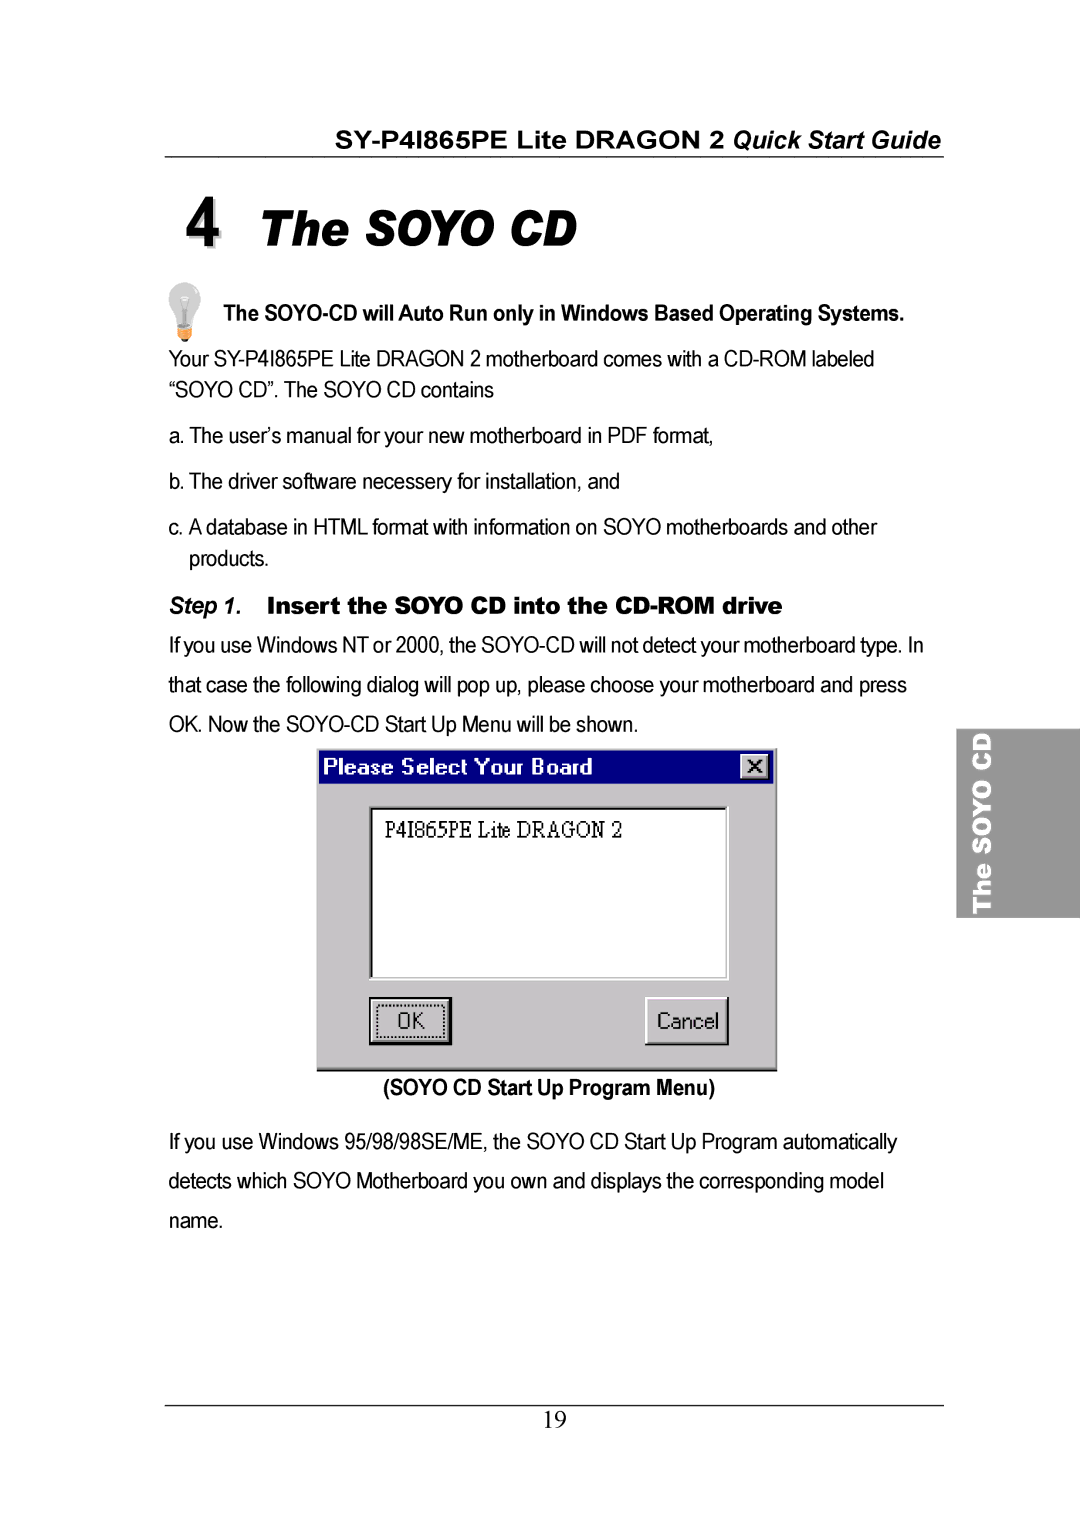 Olicom 2 quick start Insert the Soyo CD into the CD-ROM drive, Soyo CD Start Up Program Menu 